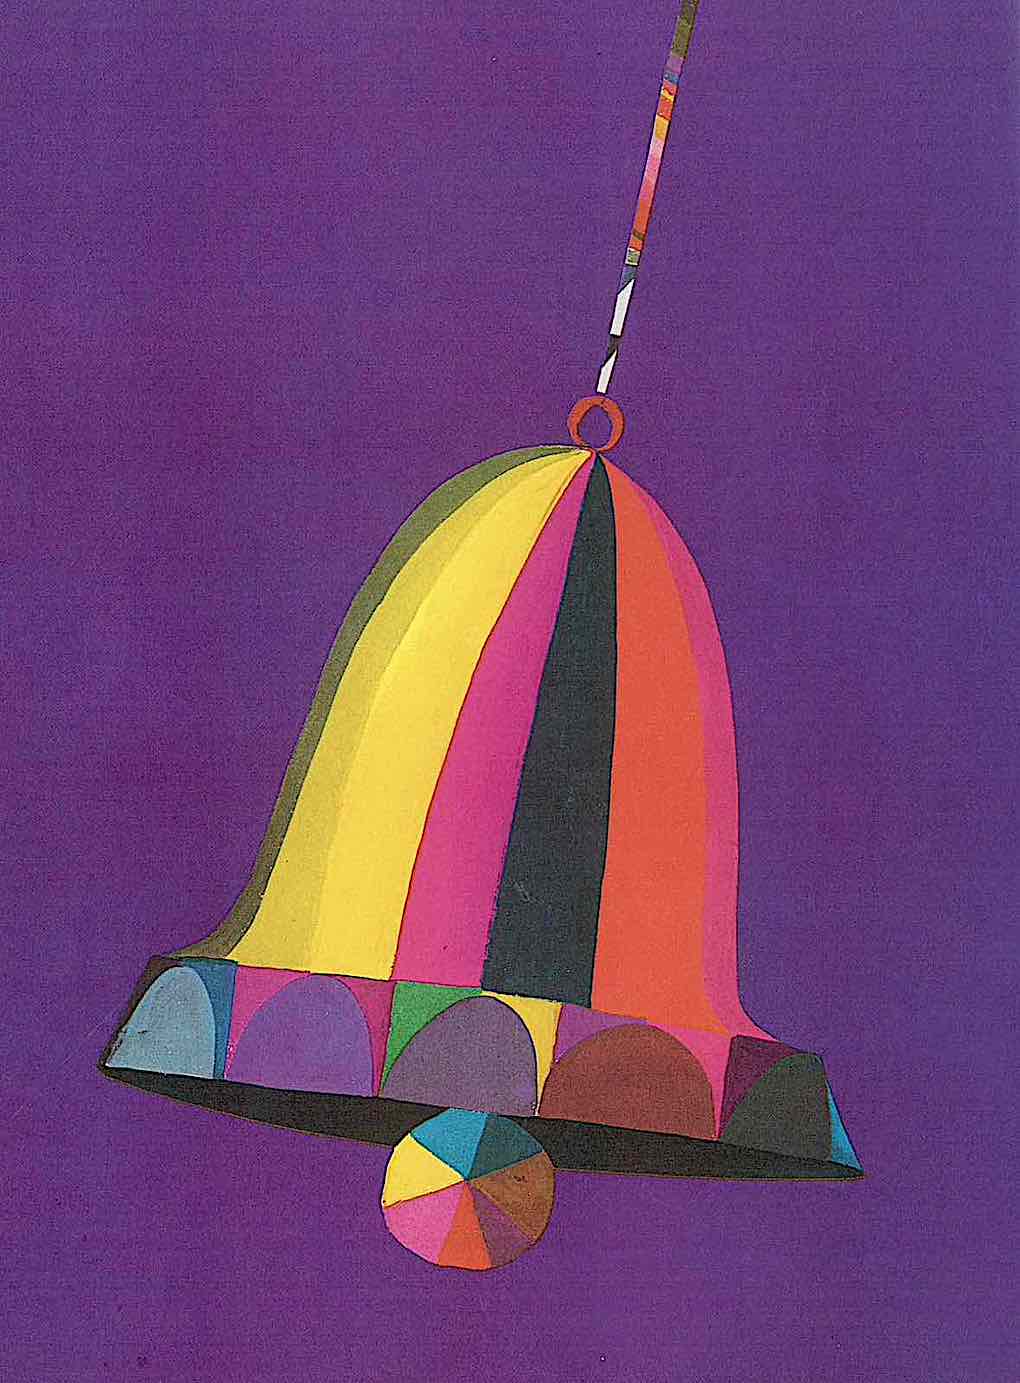 Brian Wildsmith illustration, a swinging bell